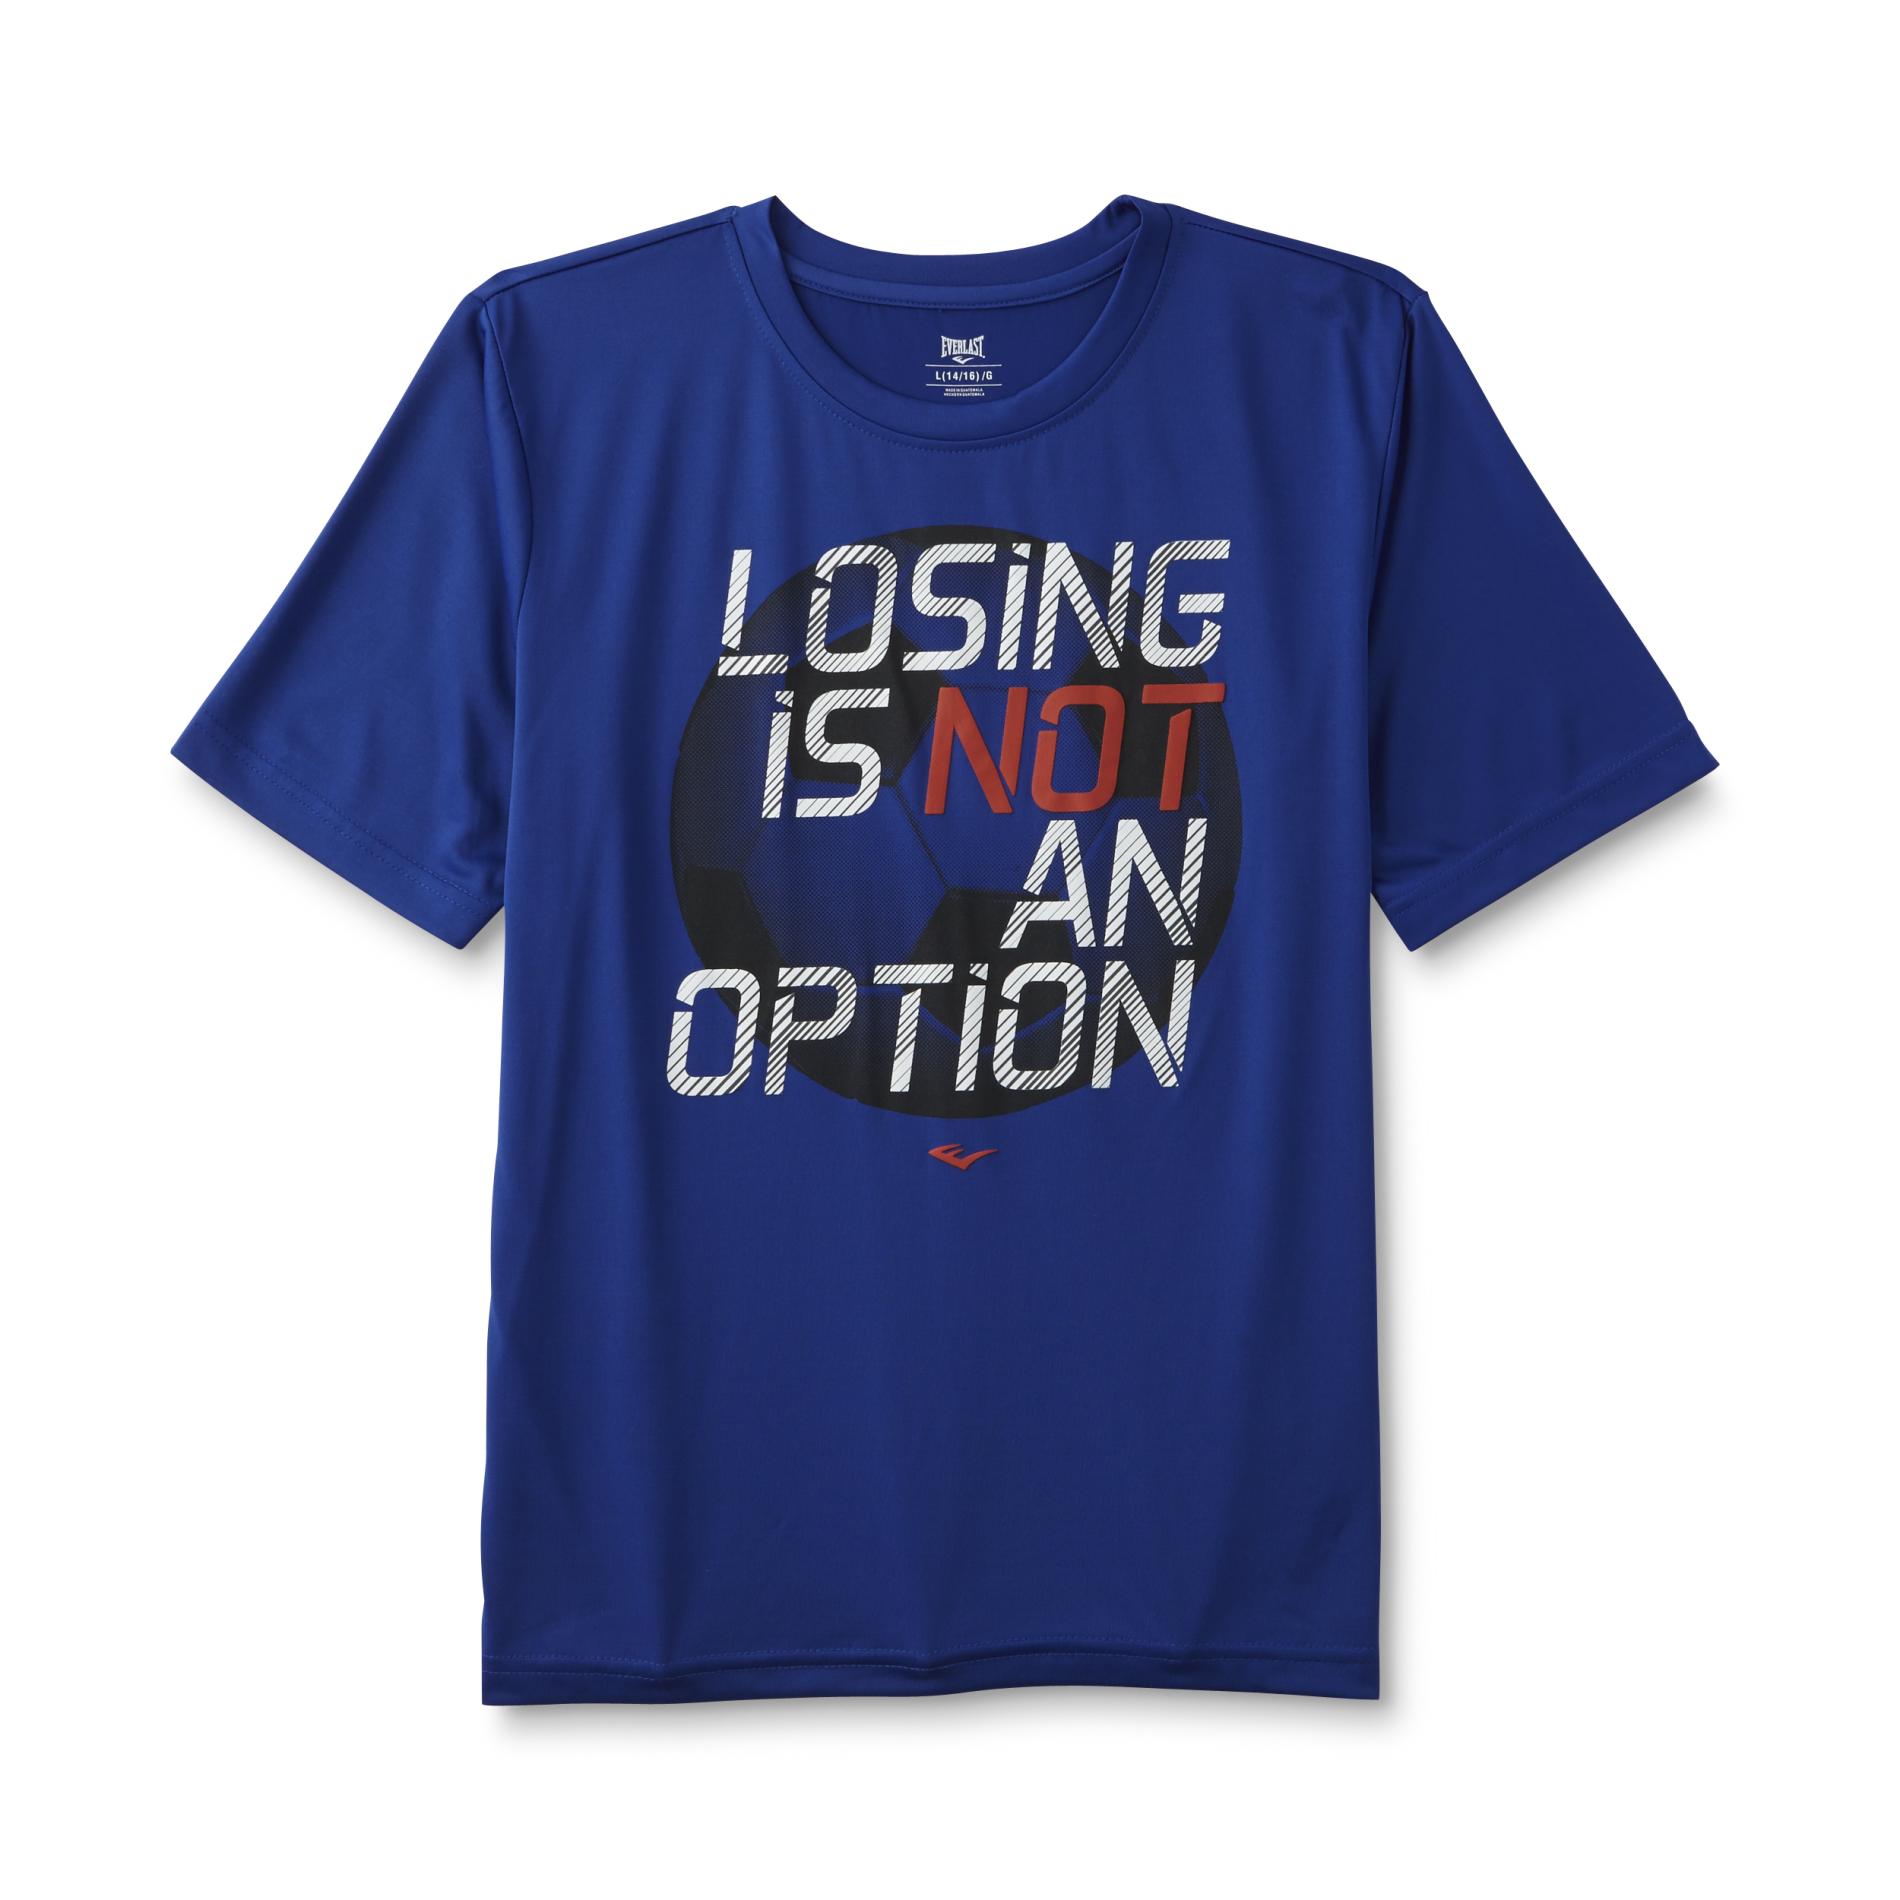 Everlast&reg; Boy's Graphic Athletic T-Shirt - Failure Is Not An Option